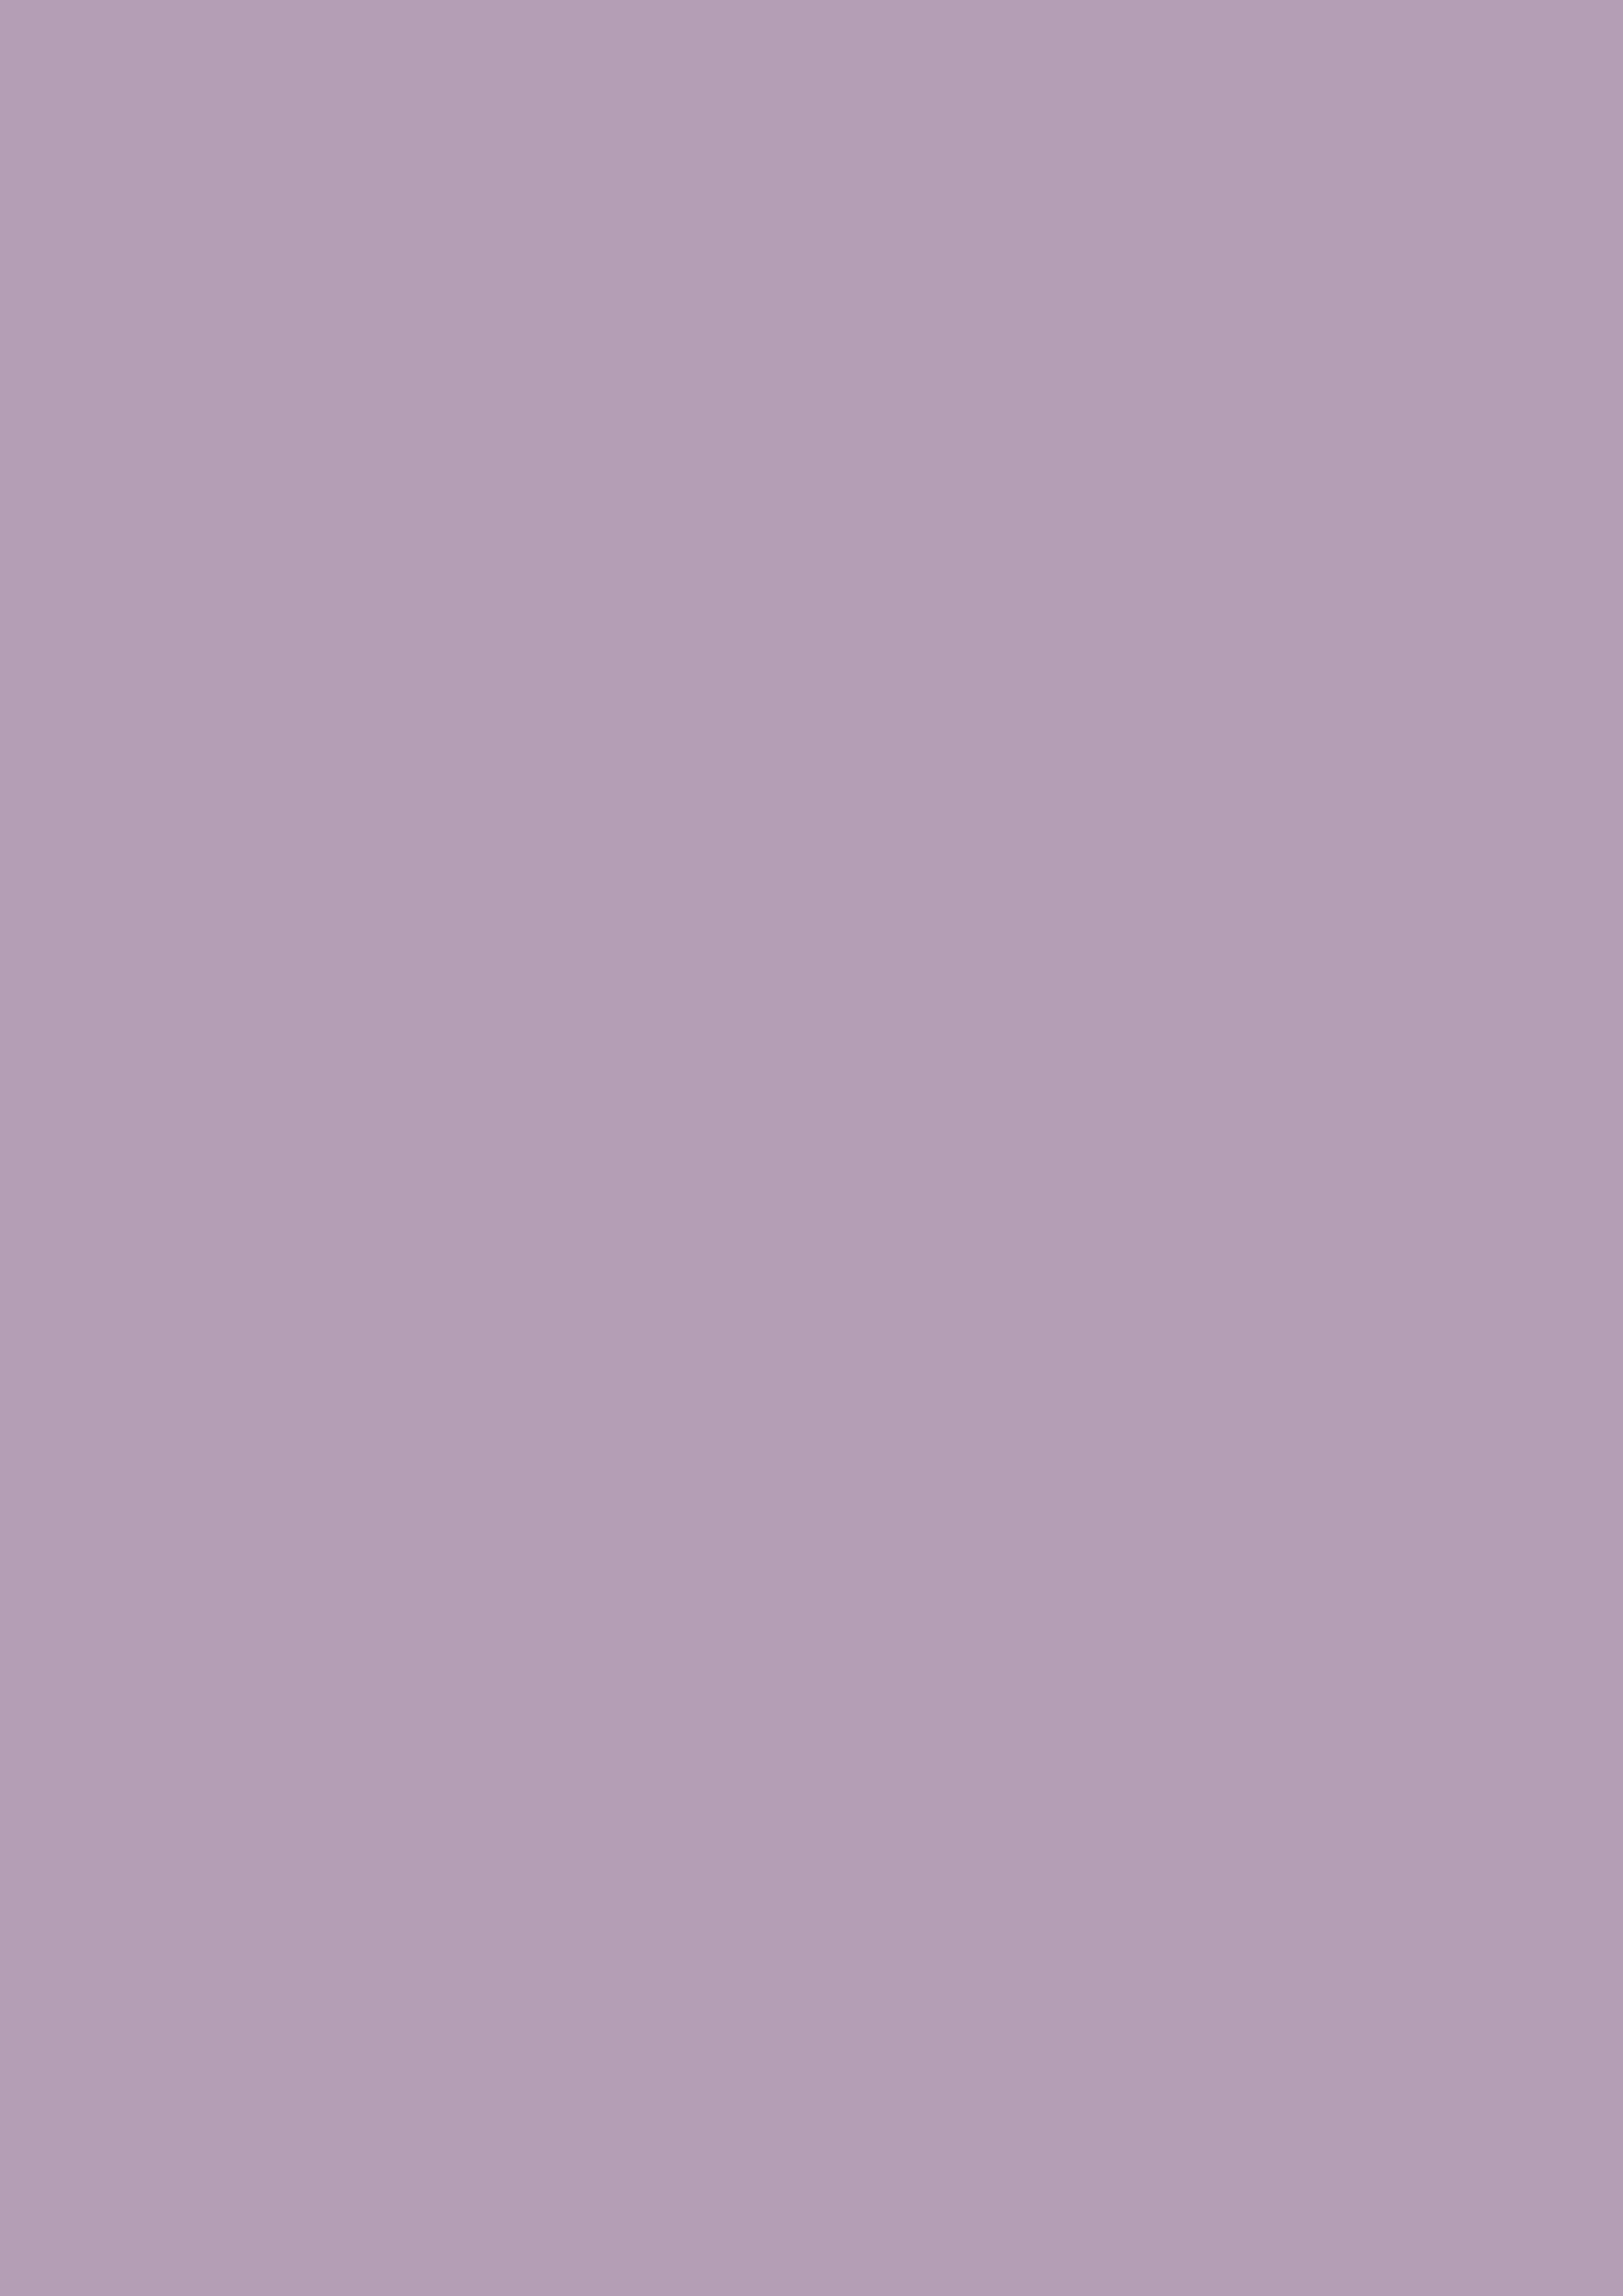 2480x3508 Pastel Purple Solid Color Background